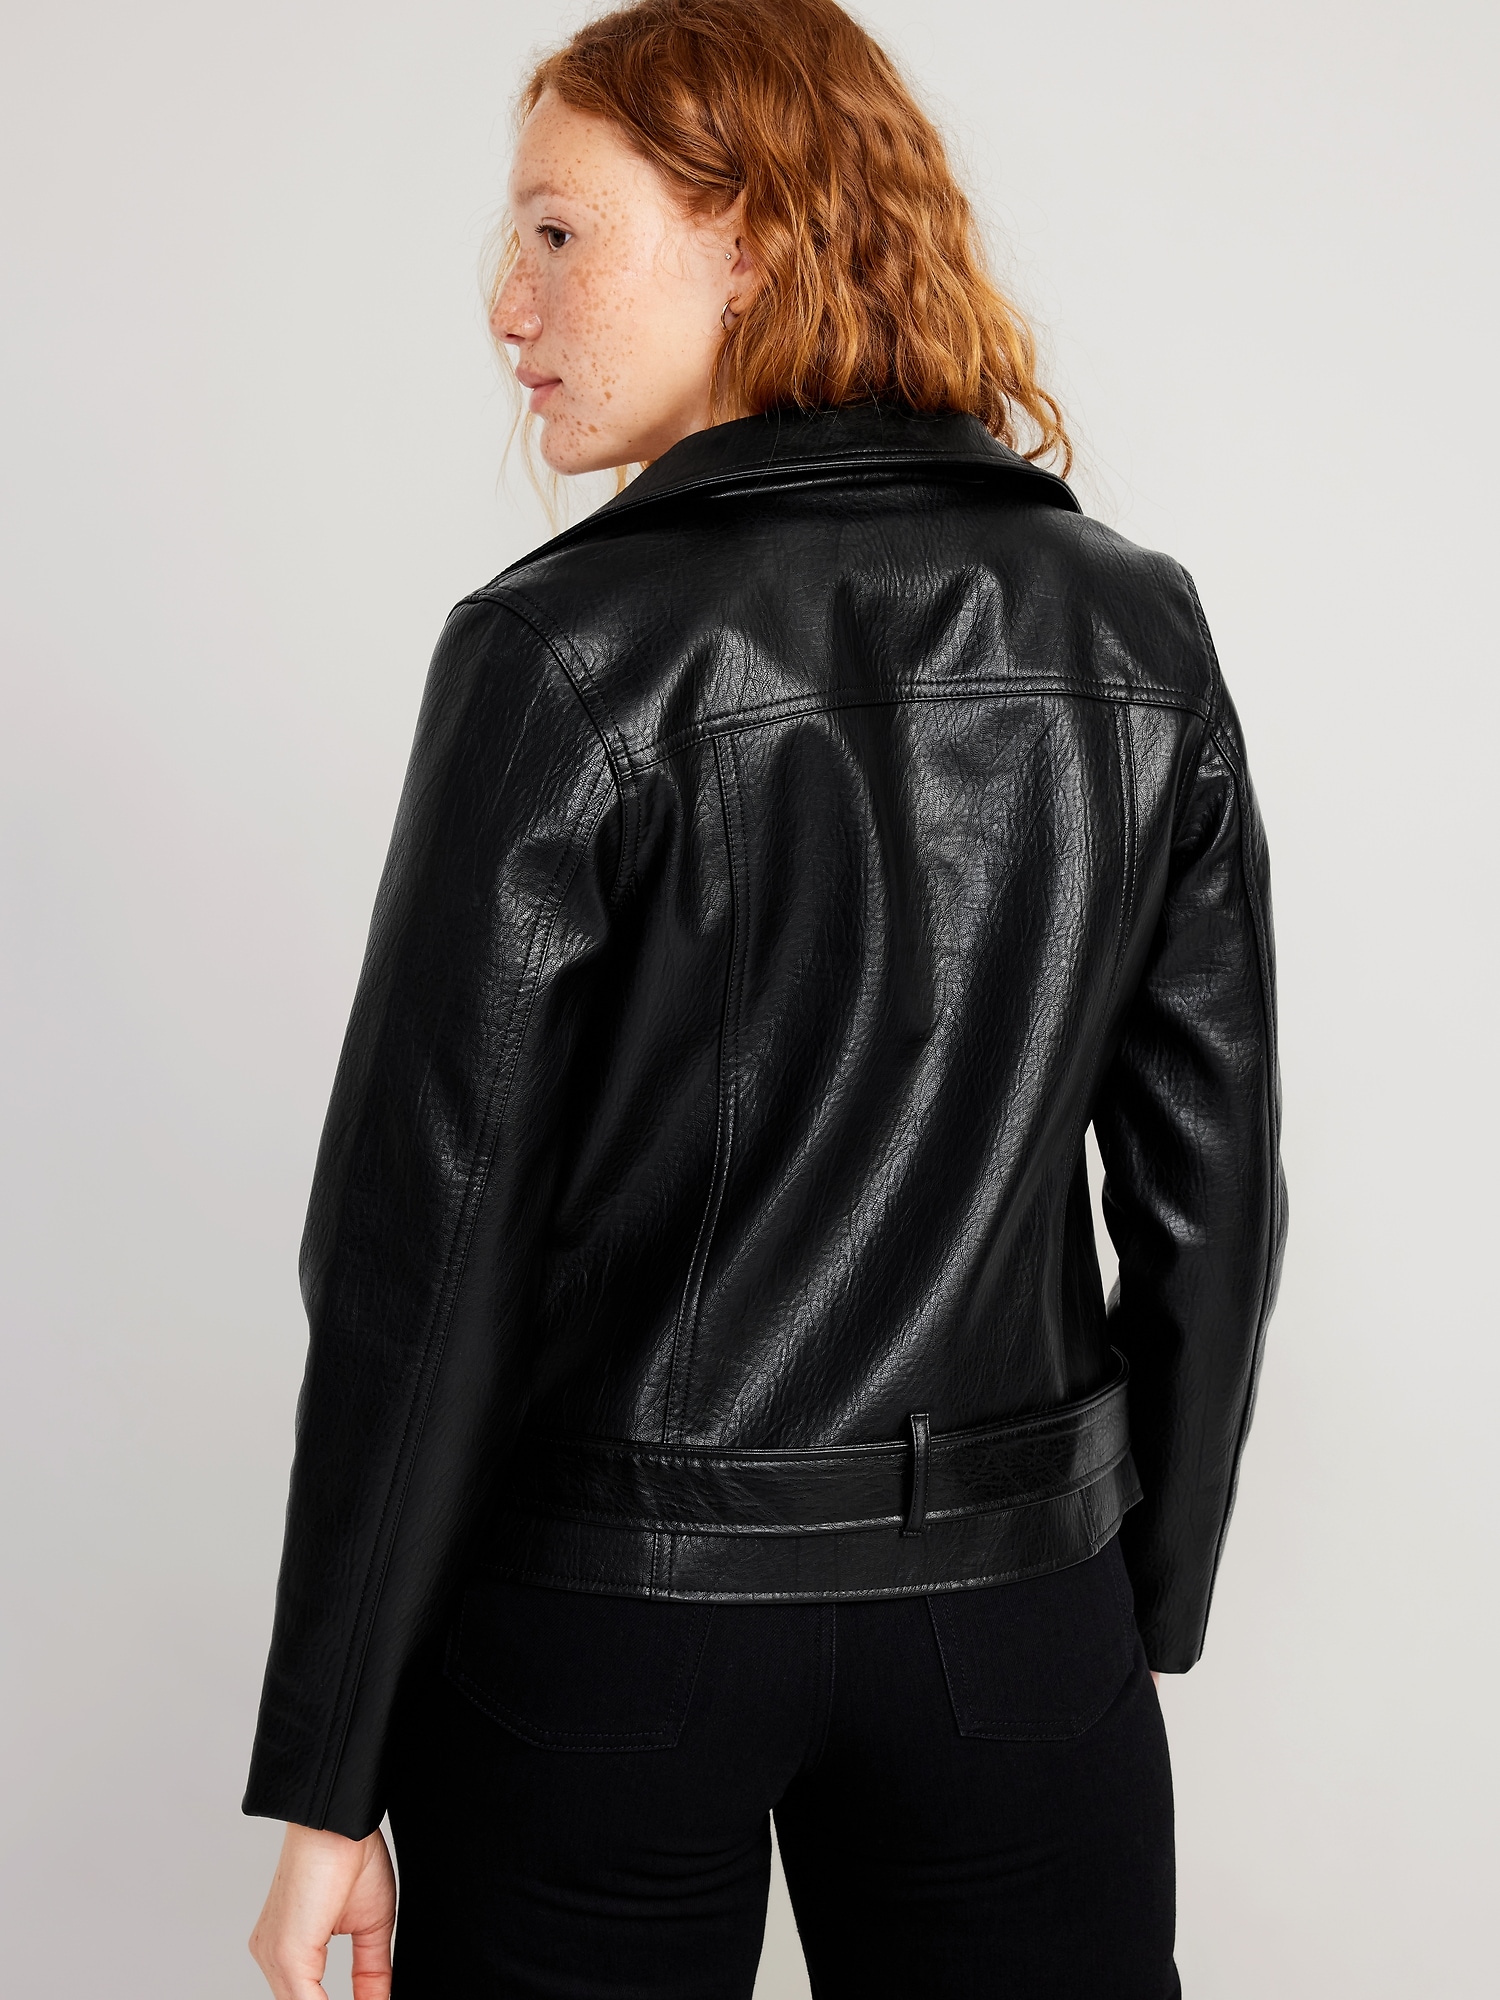 Clearance - Members Only Women's Vegan Leather Biker Jacket Black